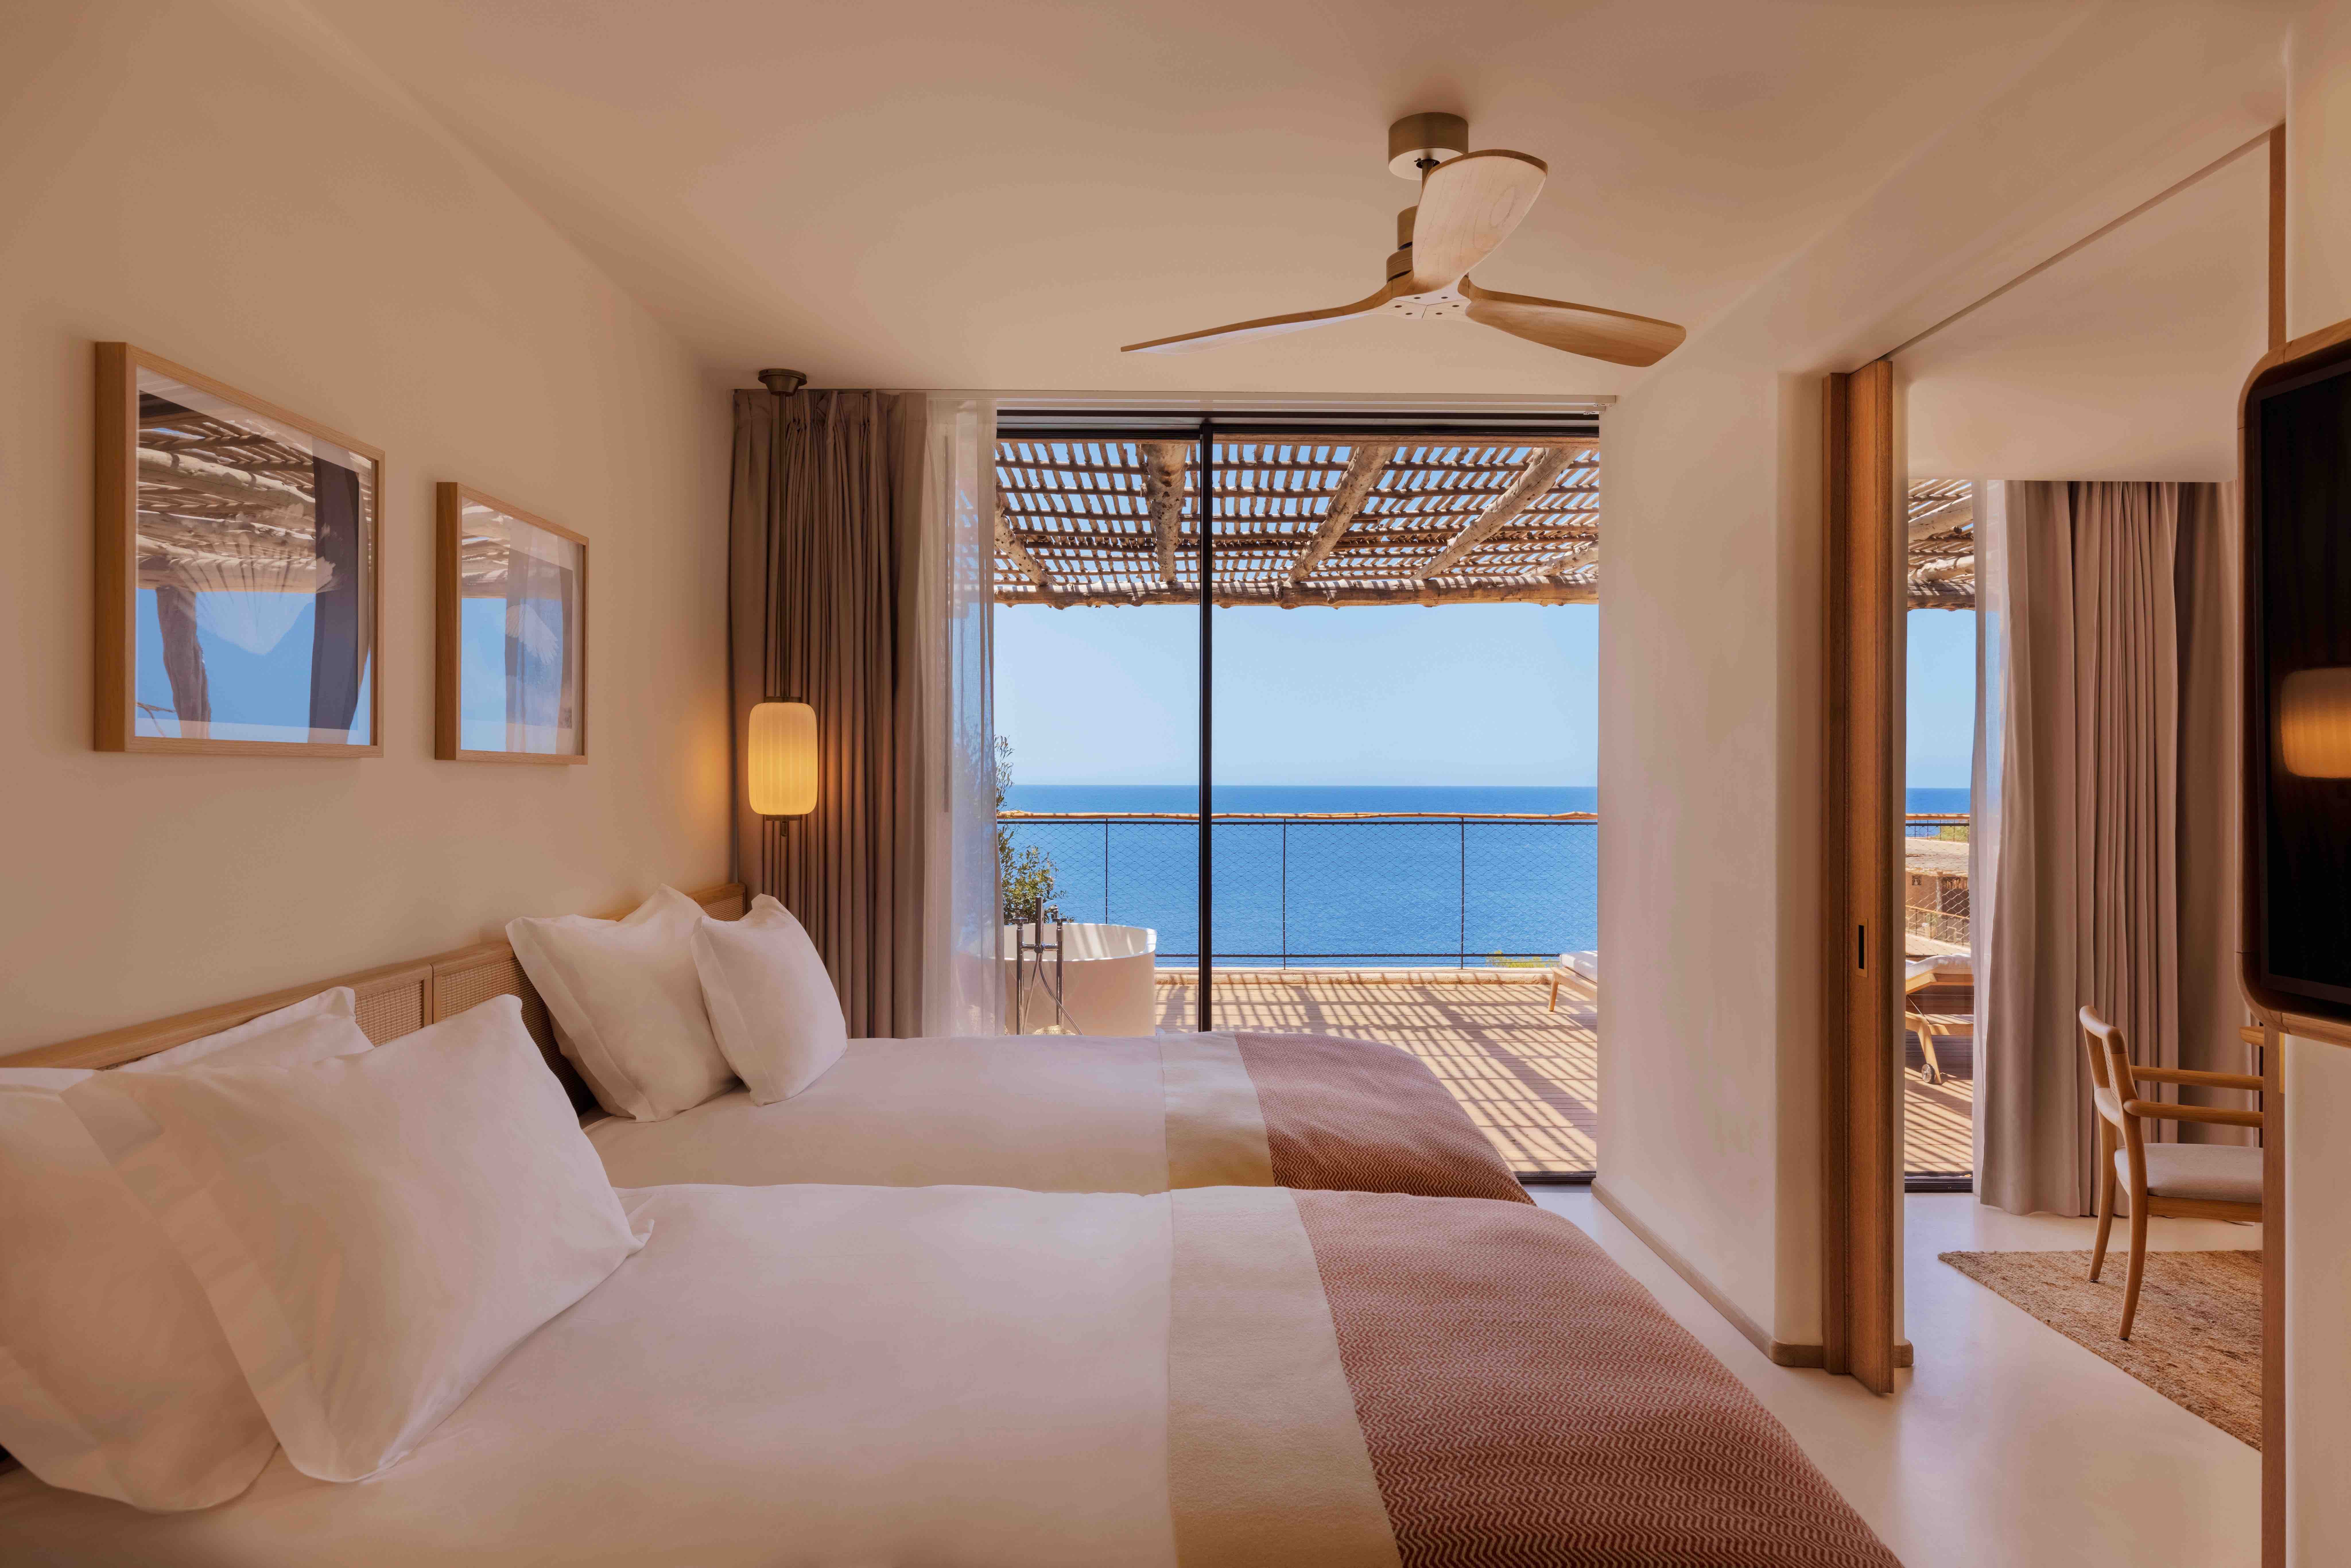 Six Sense Ibiza, the best hotels with sleep priority